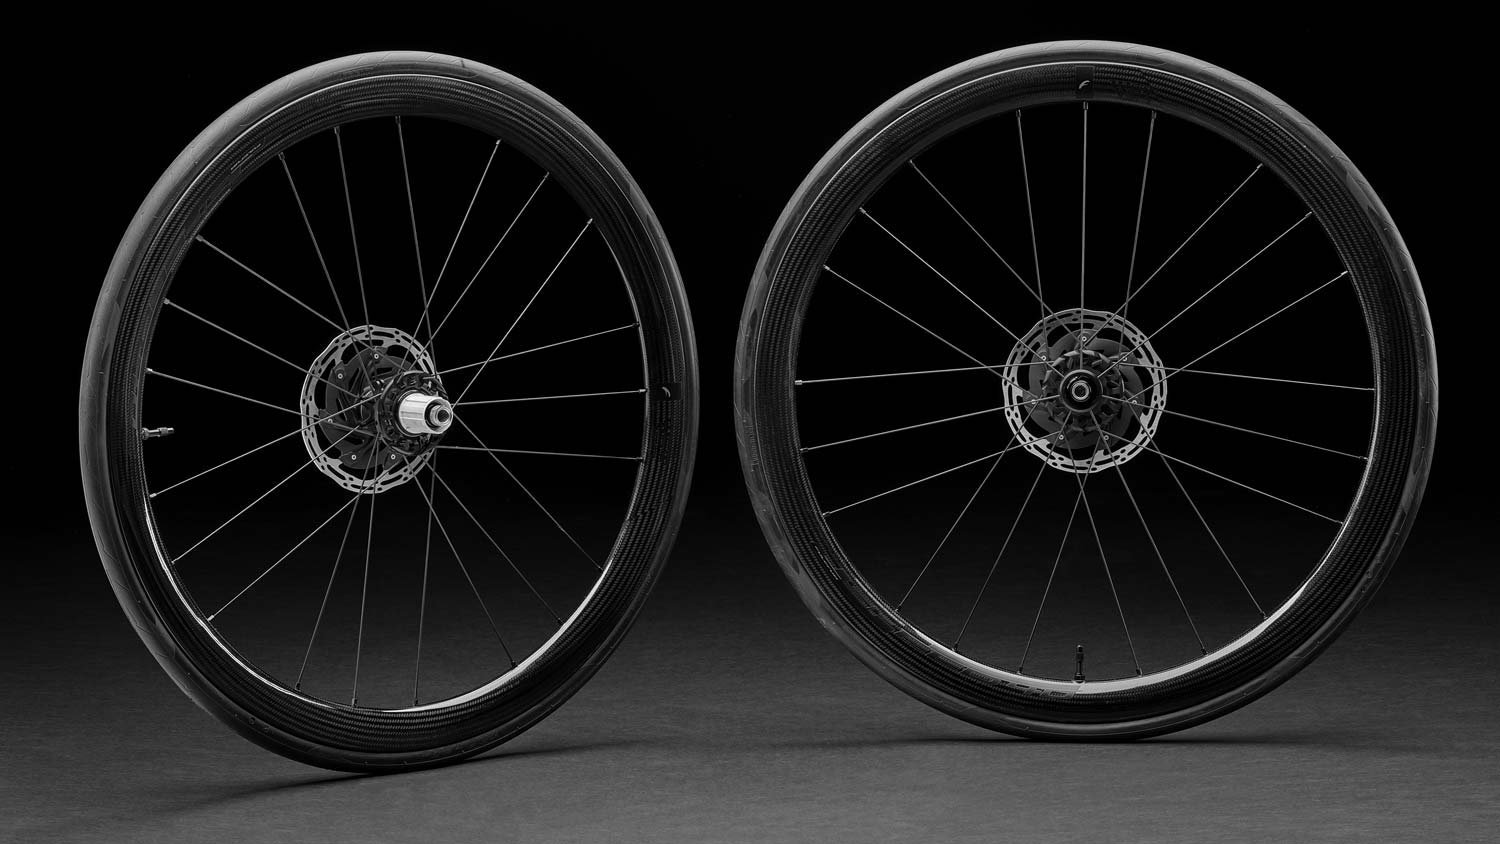 2021-Fulcrum-Speed-CMPTZN-40-55-DB-aero-carbon-road-wheels_55mm-40mm-aerodynamic-carbon-tubeless-disc-brake-road-bike-race-wheels_40mm-deep-pair.jpg